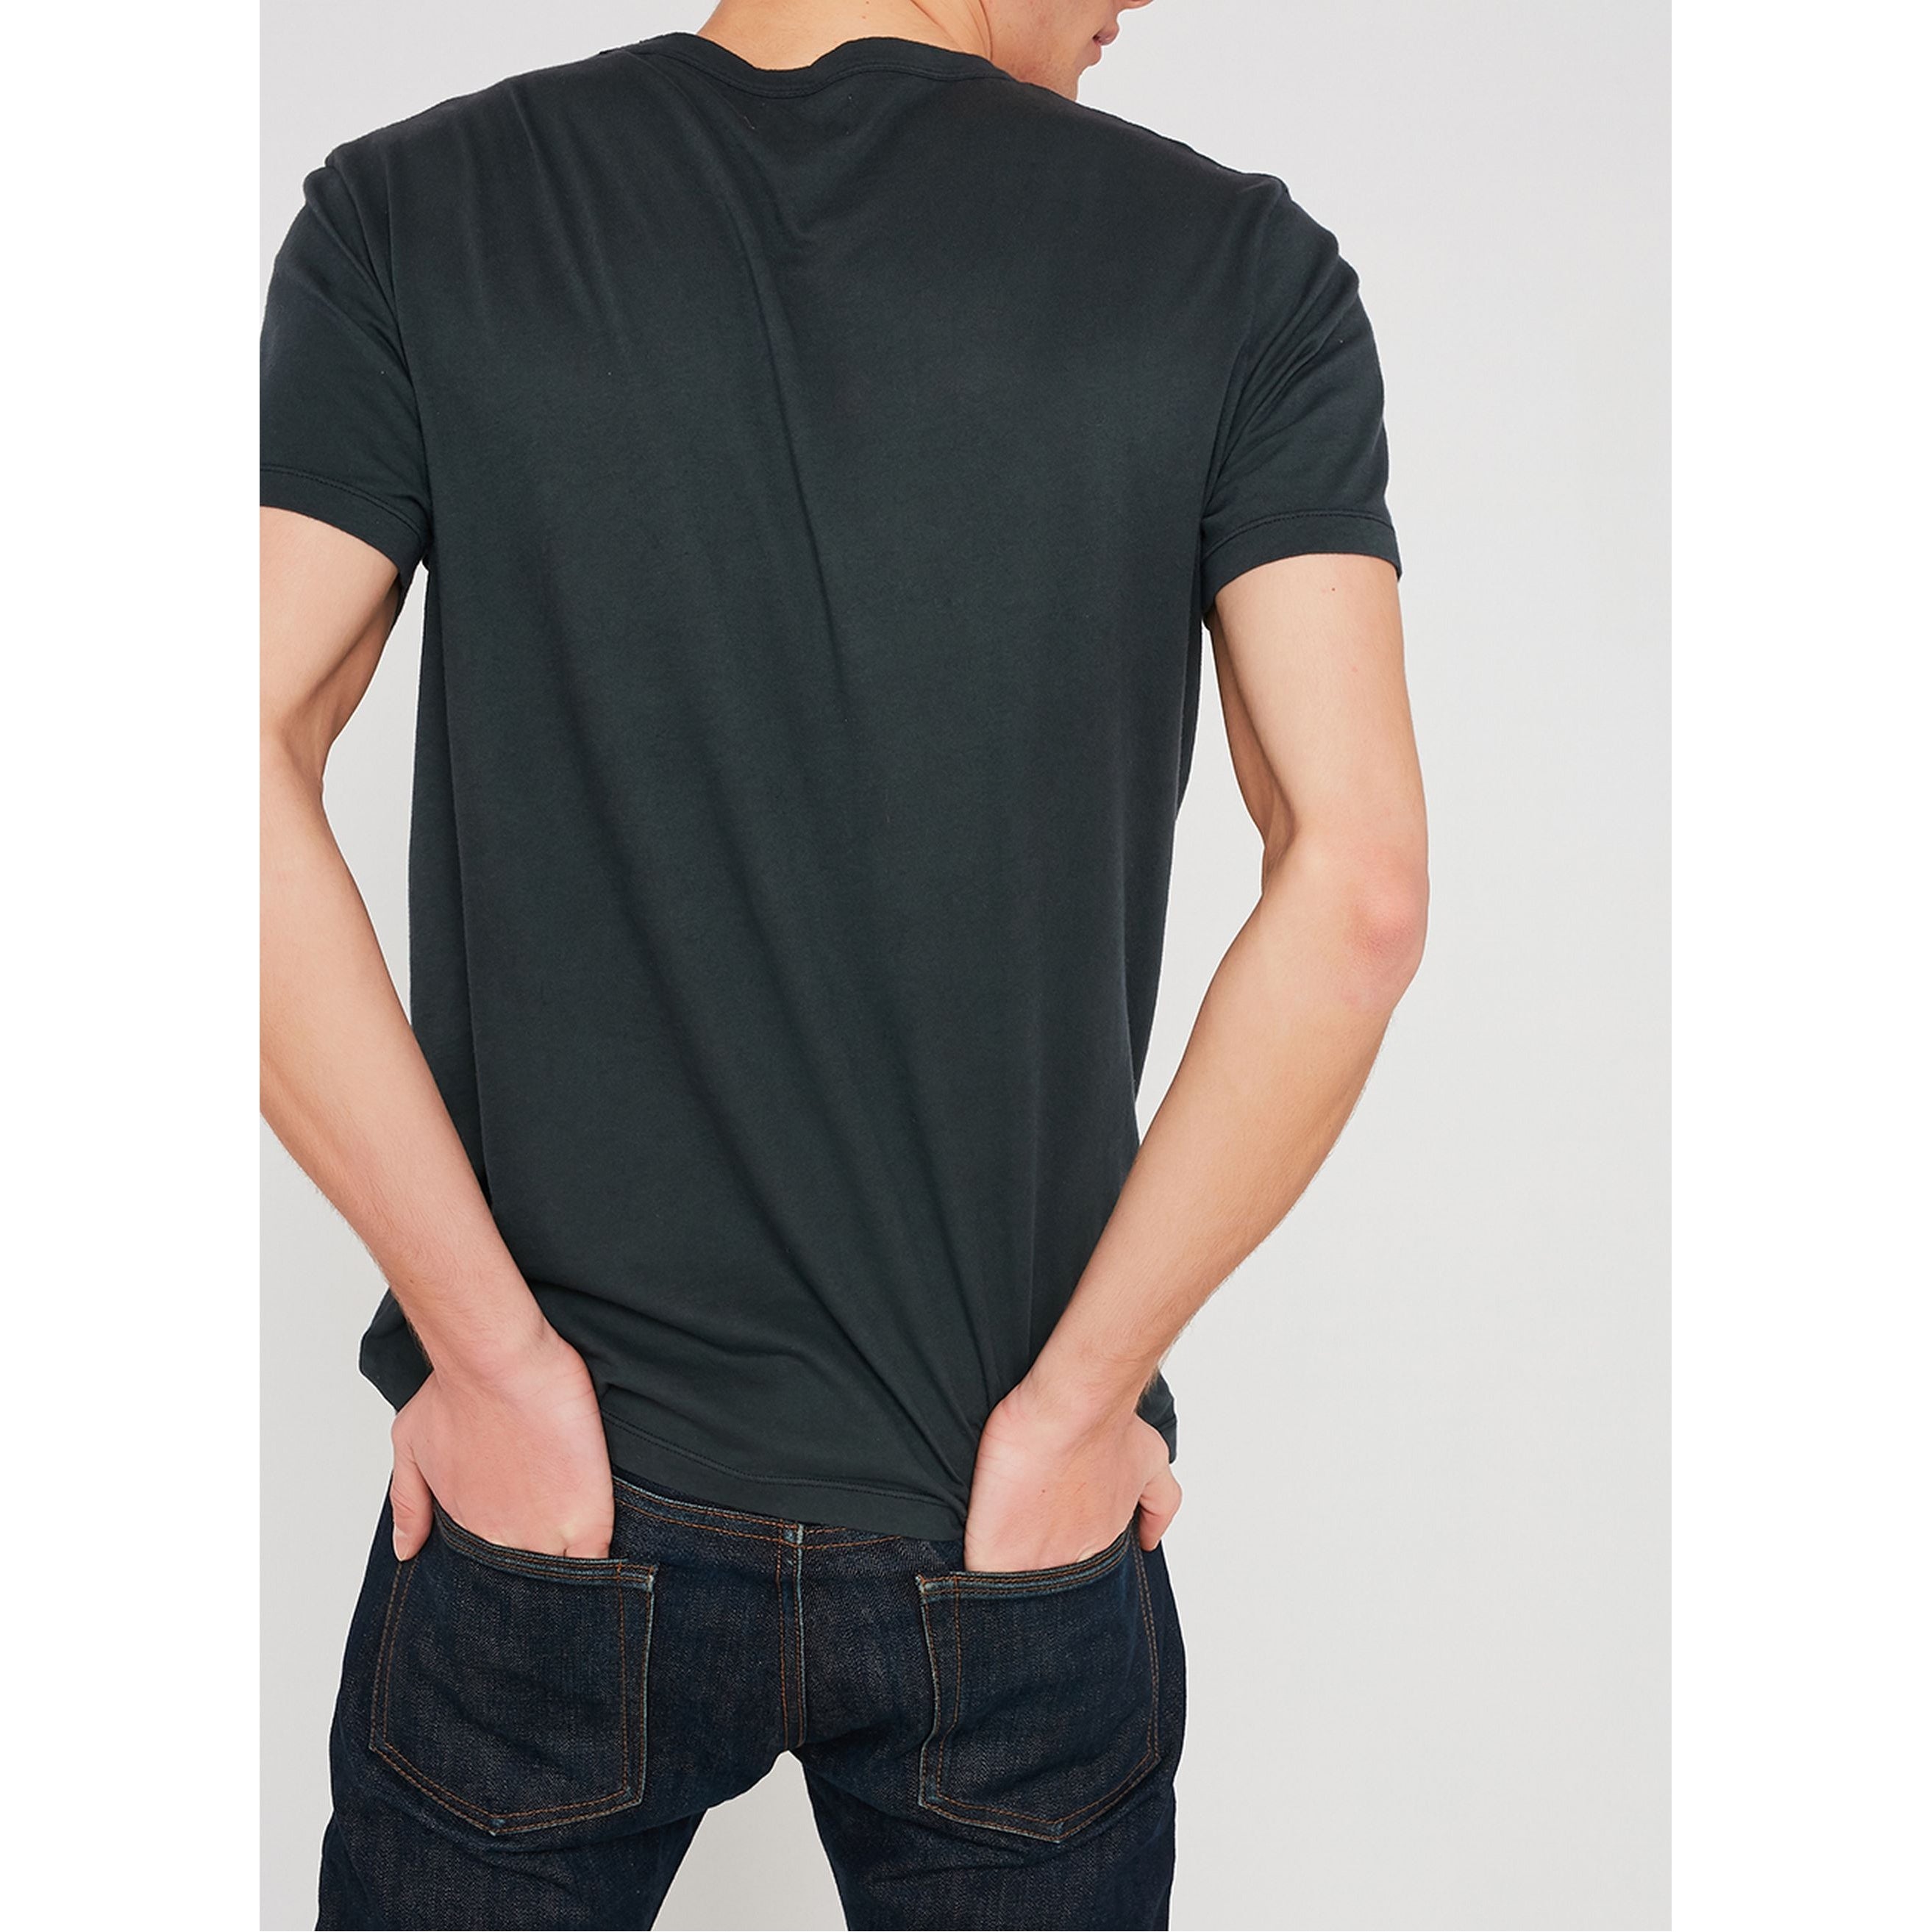 T-Shirt Turbigo Charcoal (4508057731135)